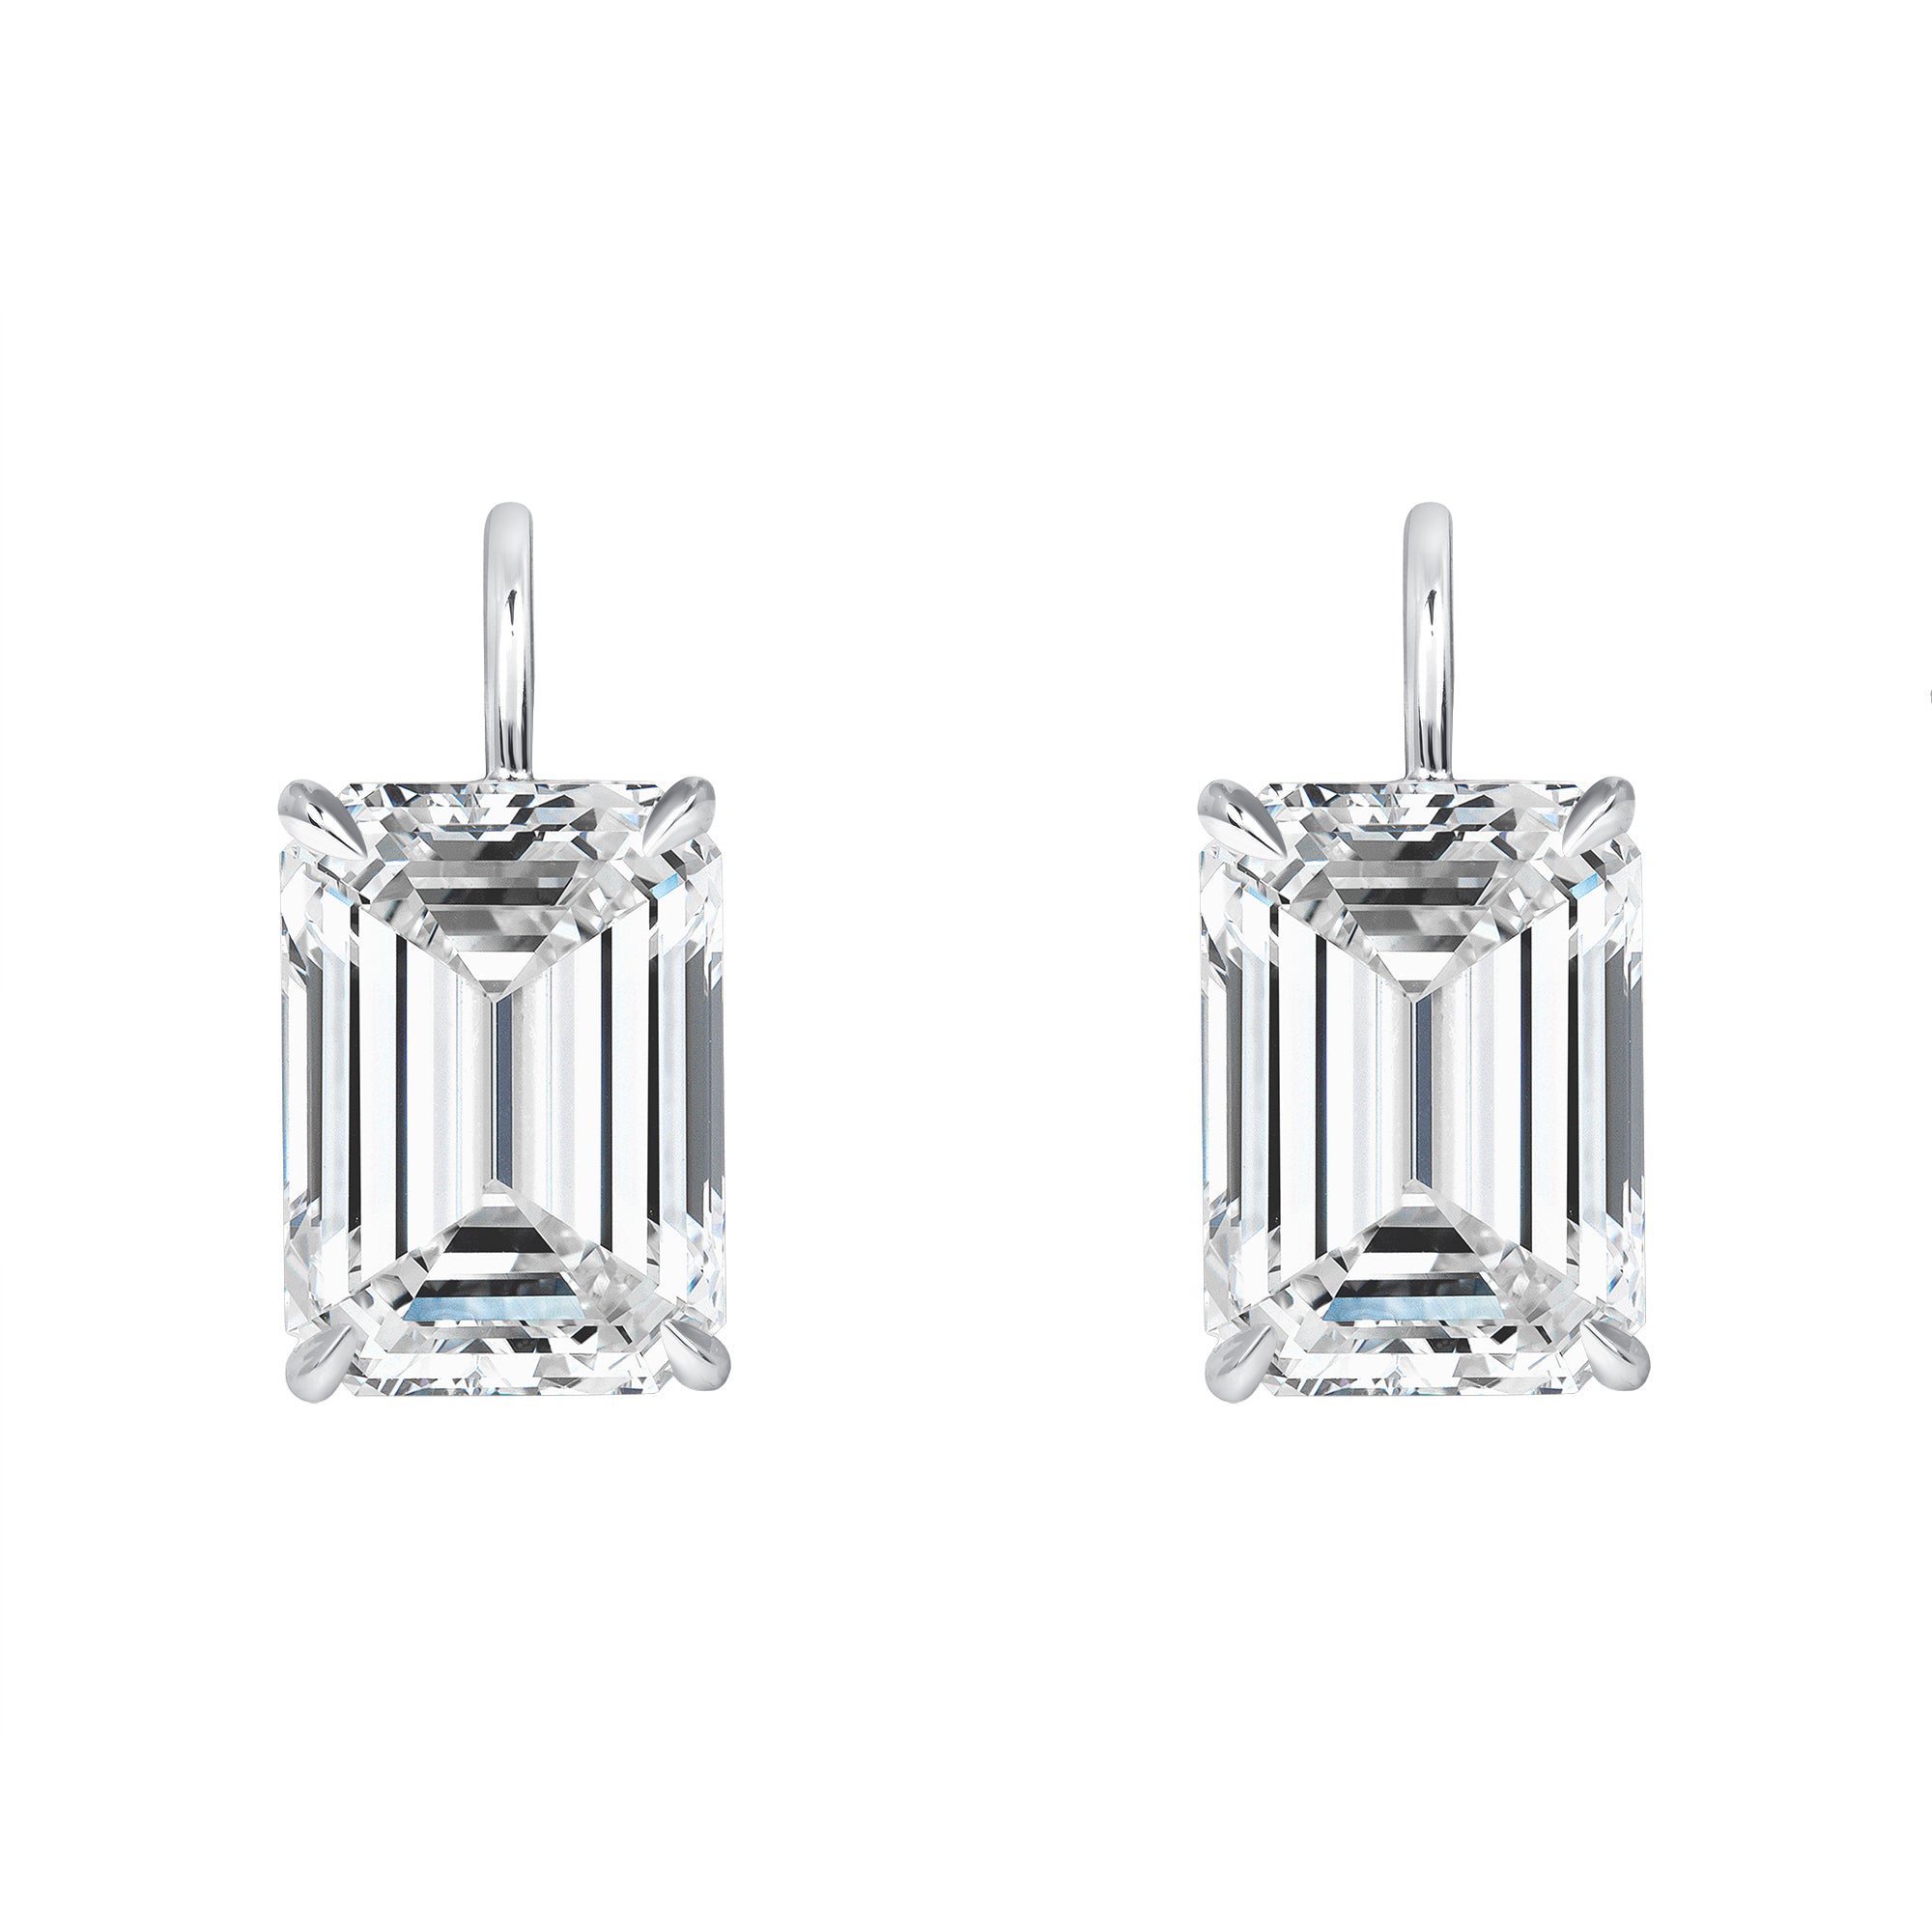 Emerald Cut Diamond Leverback Earrings in 18K White Gold, GIA Certified